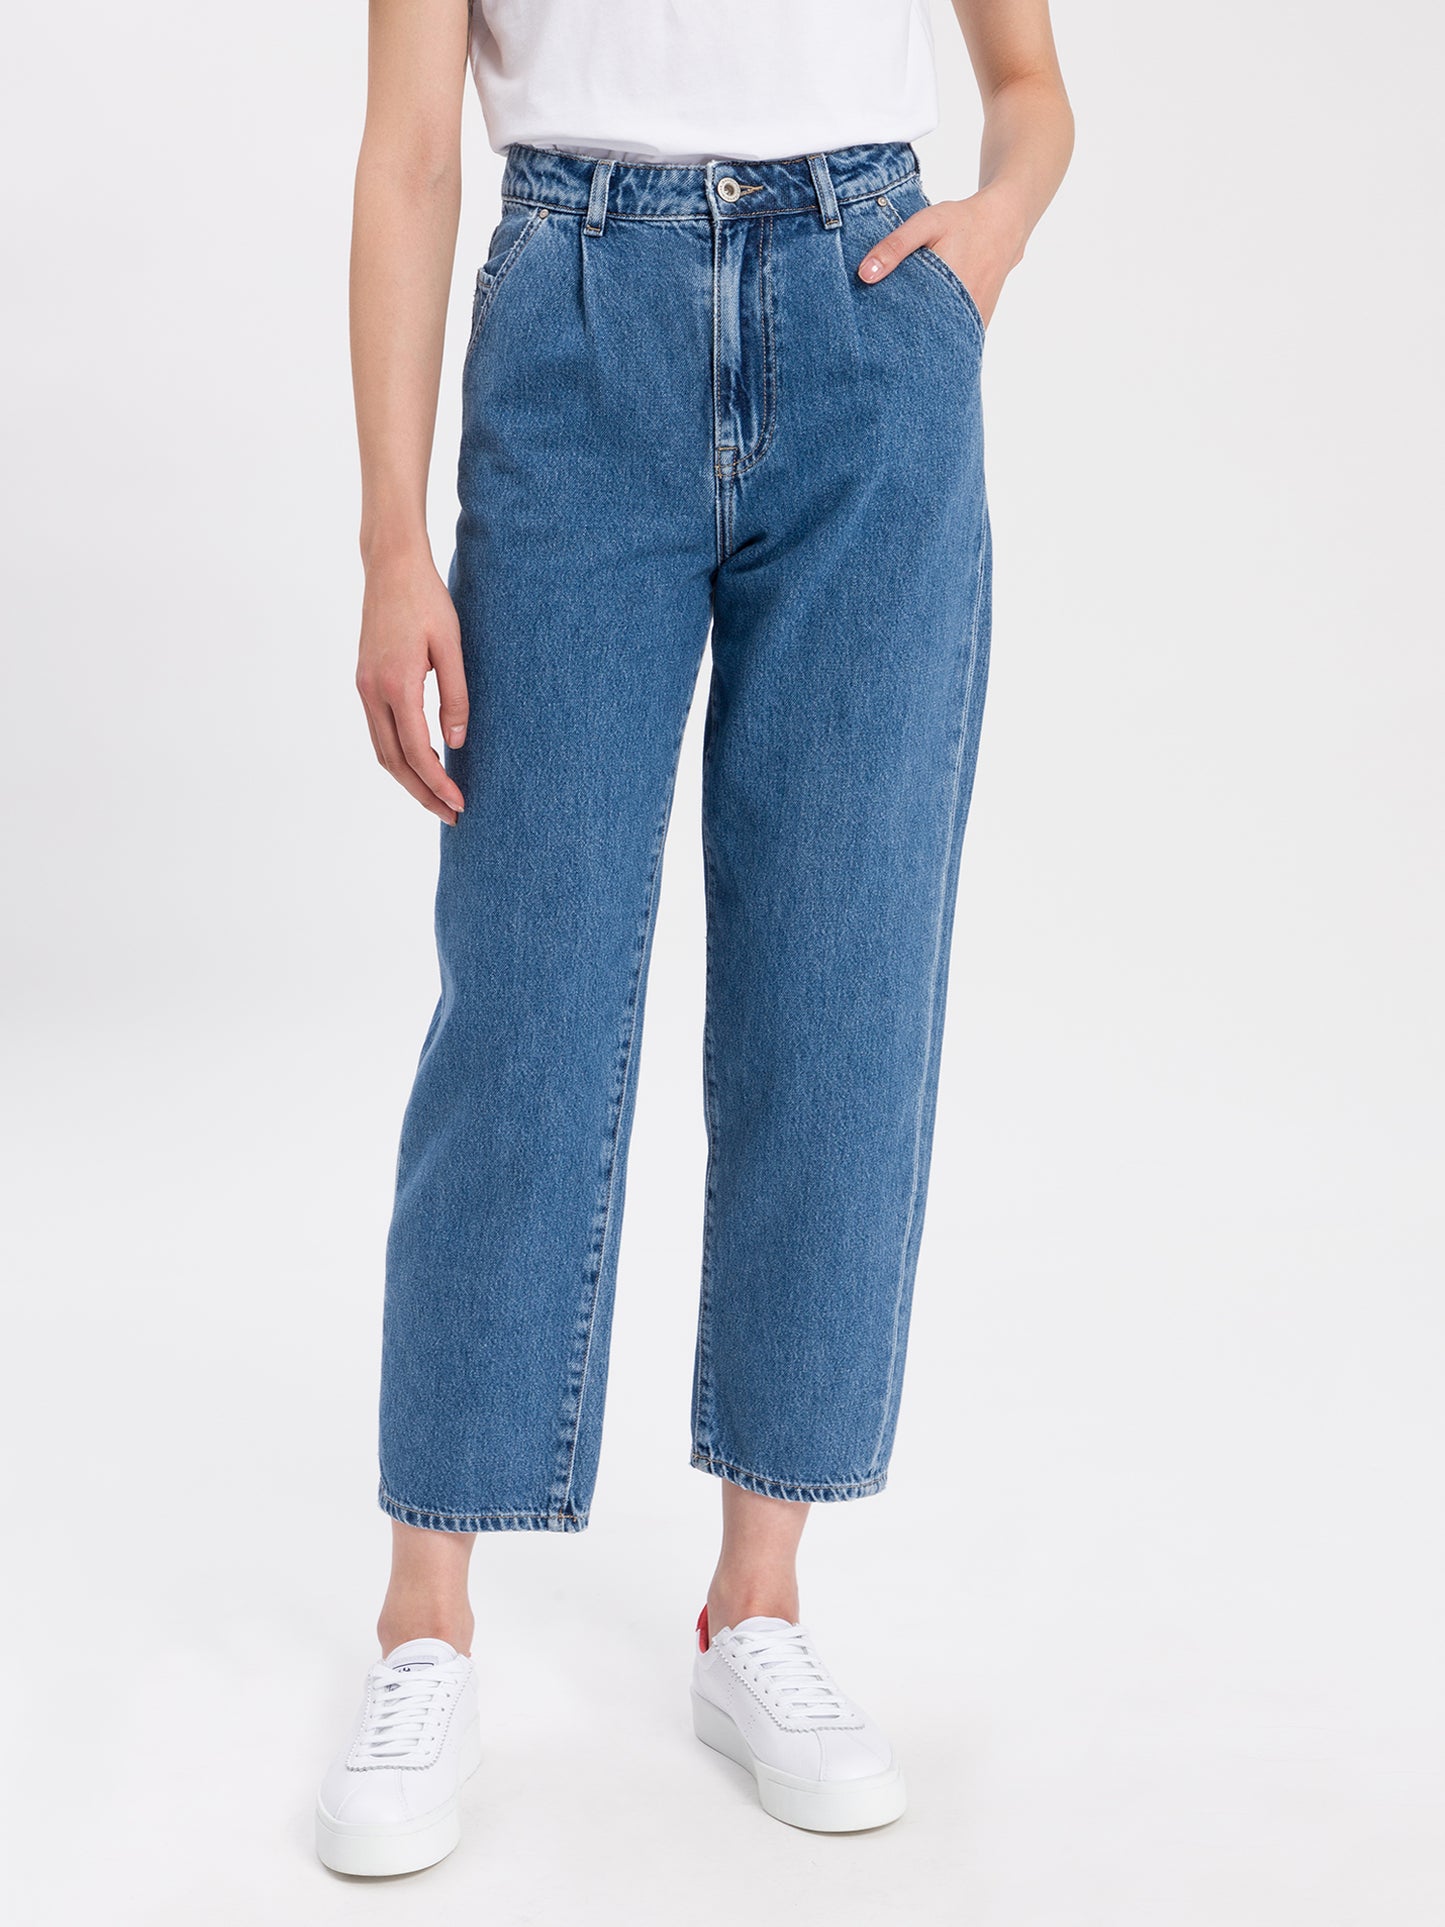 Women's jeans loose fit high waist blue